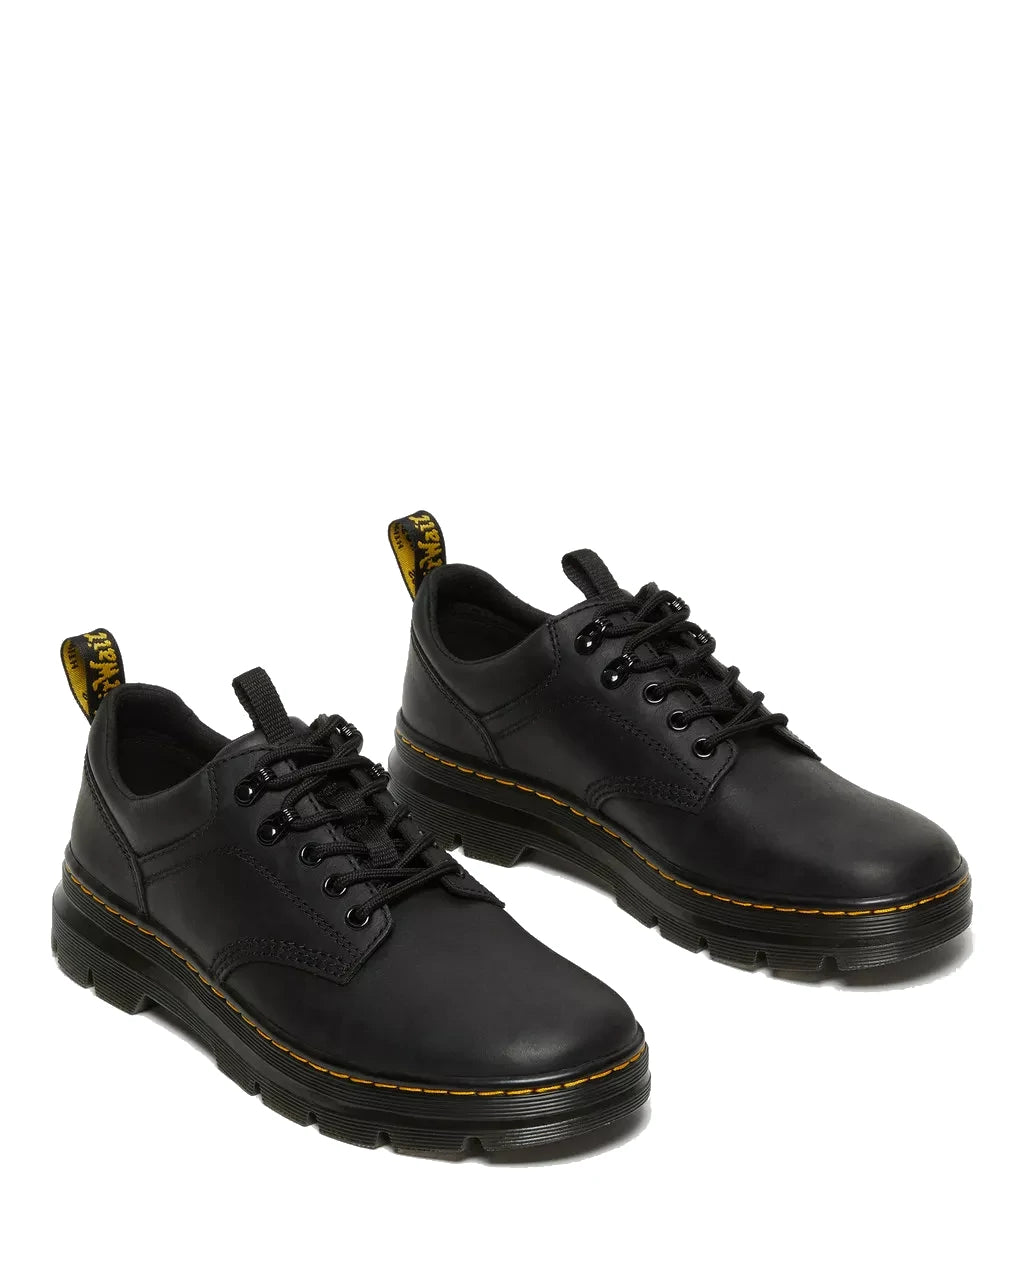 Dr Martens Men's Reeder Wyoming Leather Utility Shoes - Black